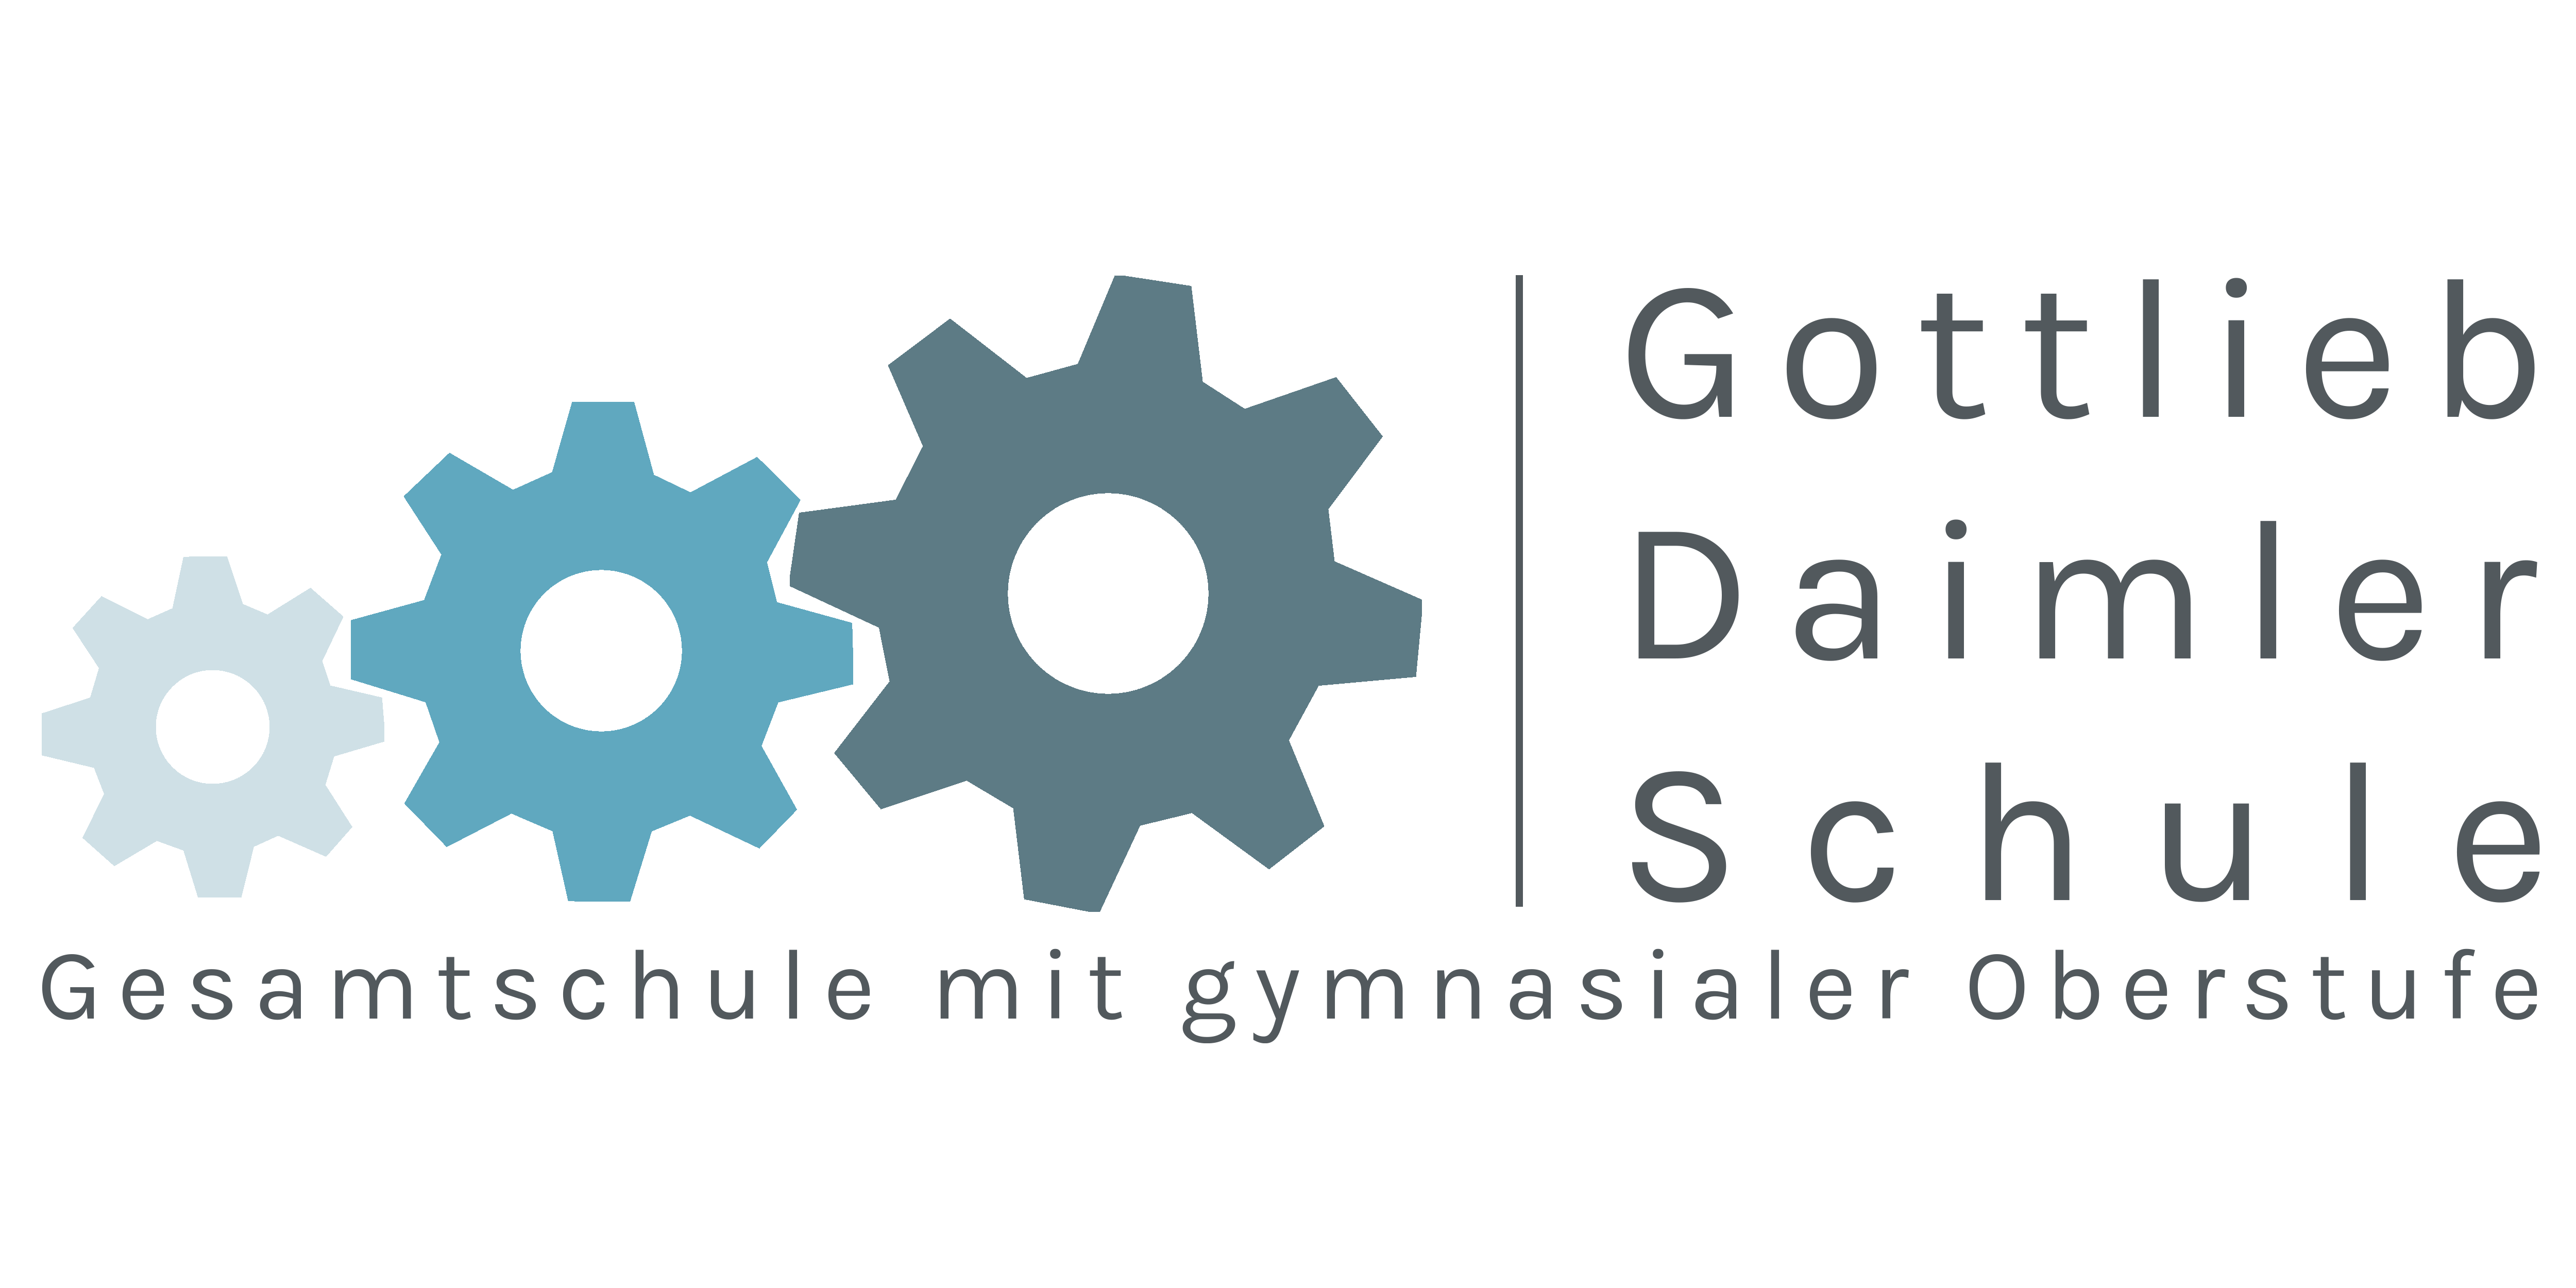 Gottlieb-Daimler-Schule Gesamtschule mit gymnasialer Oberstufe